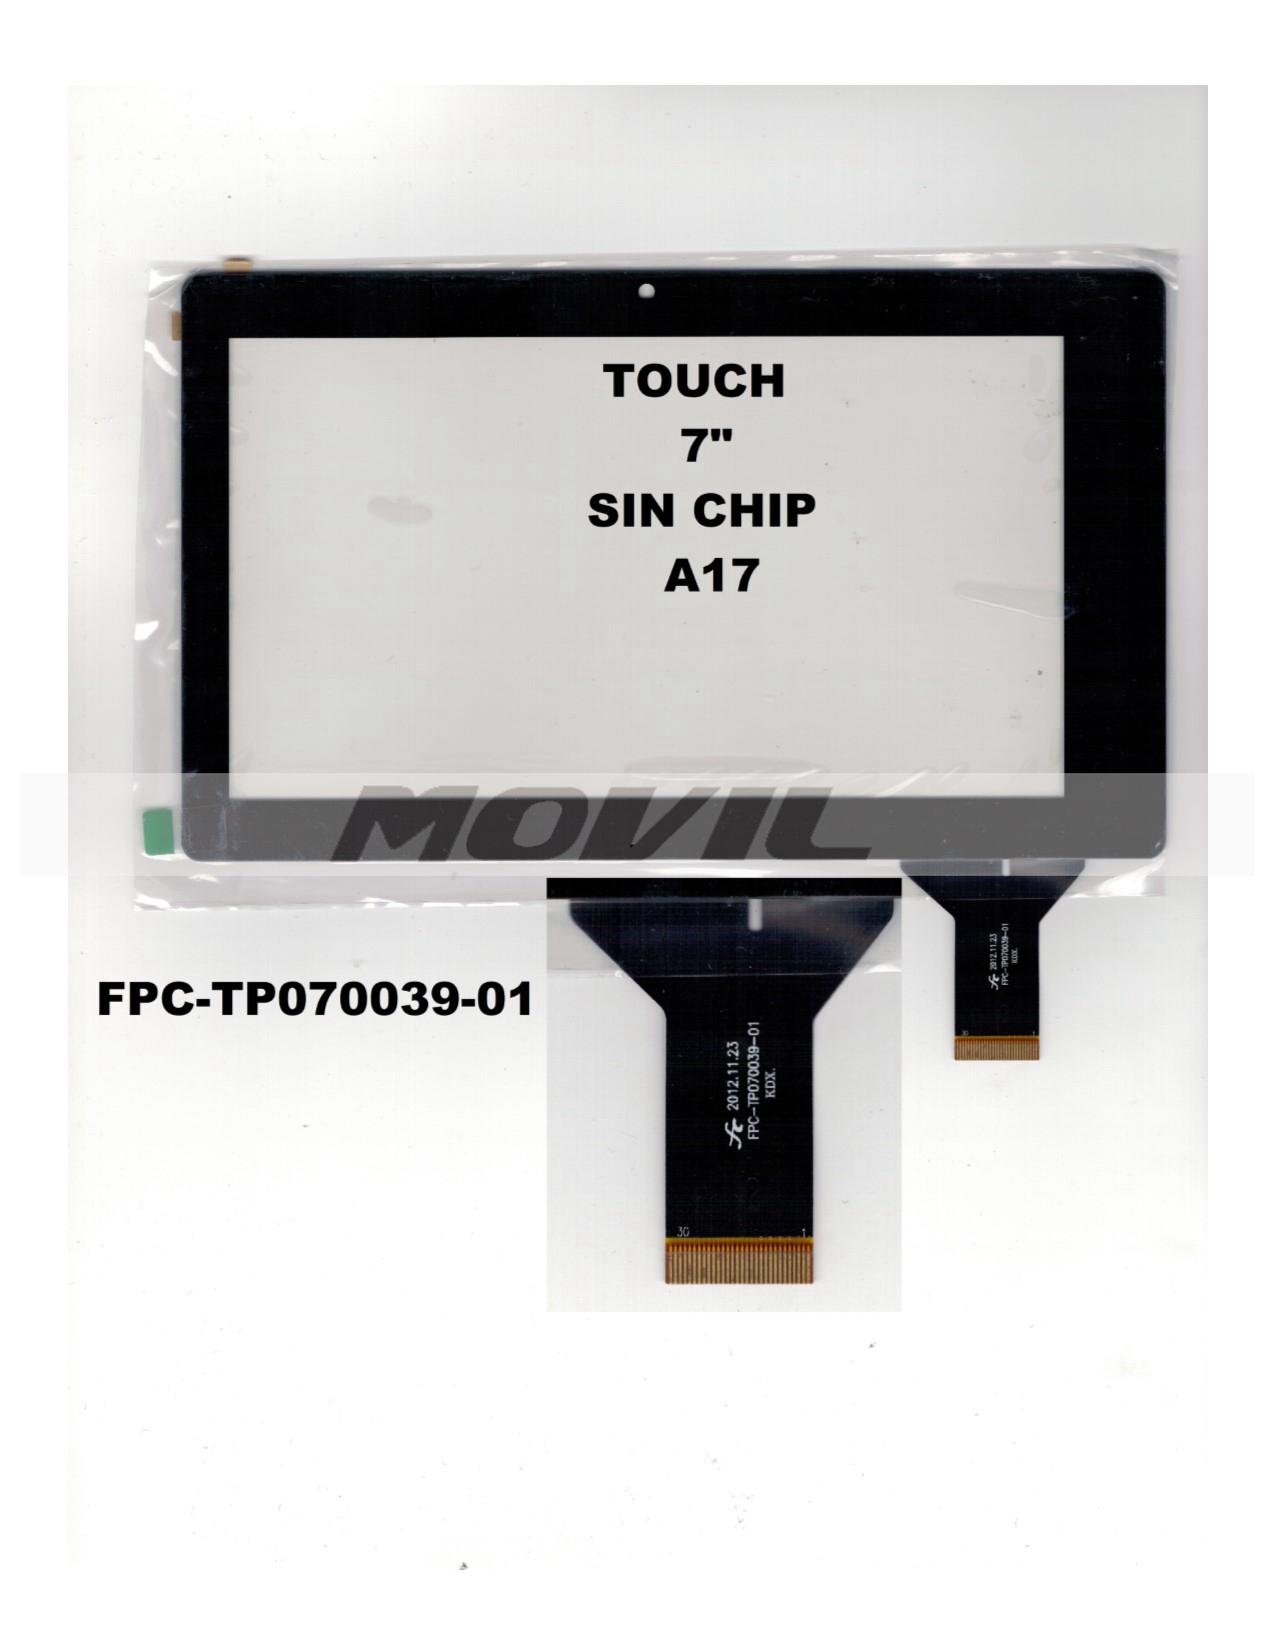 Touch tactil para tablet flex 7 inch SIN CHIP A17 FPC-TP070039-01